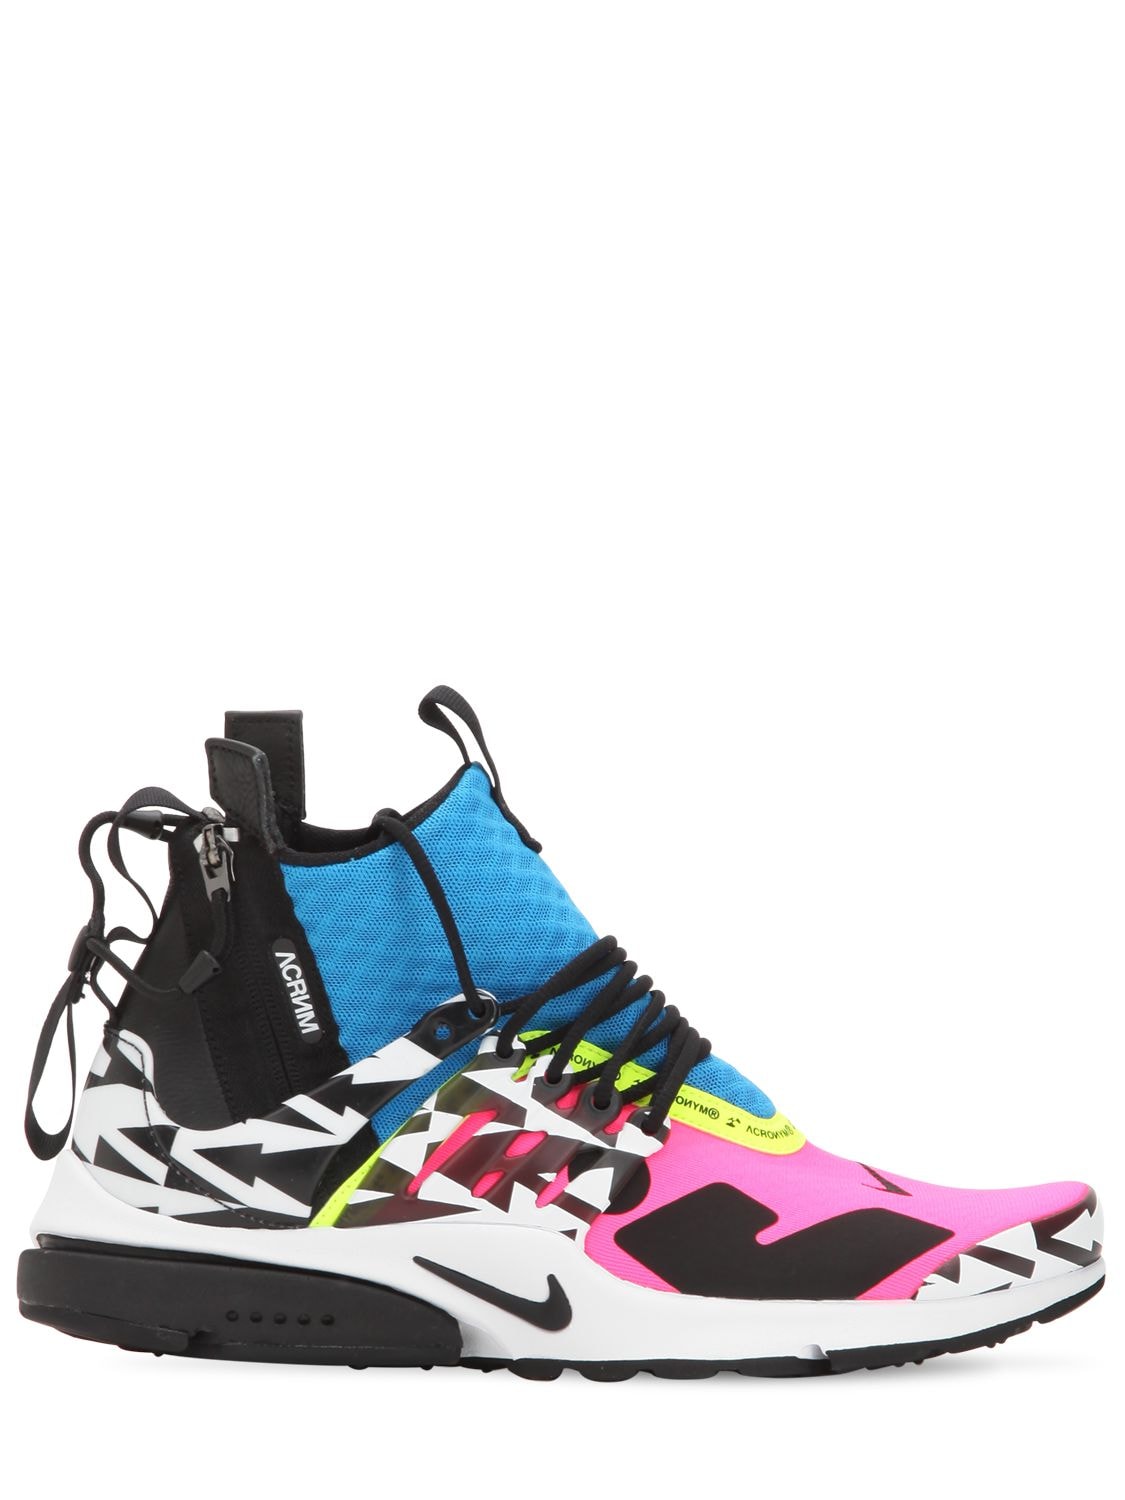 Nike Acronym X  Presto Mid Sneakers In Racer Pink